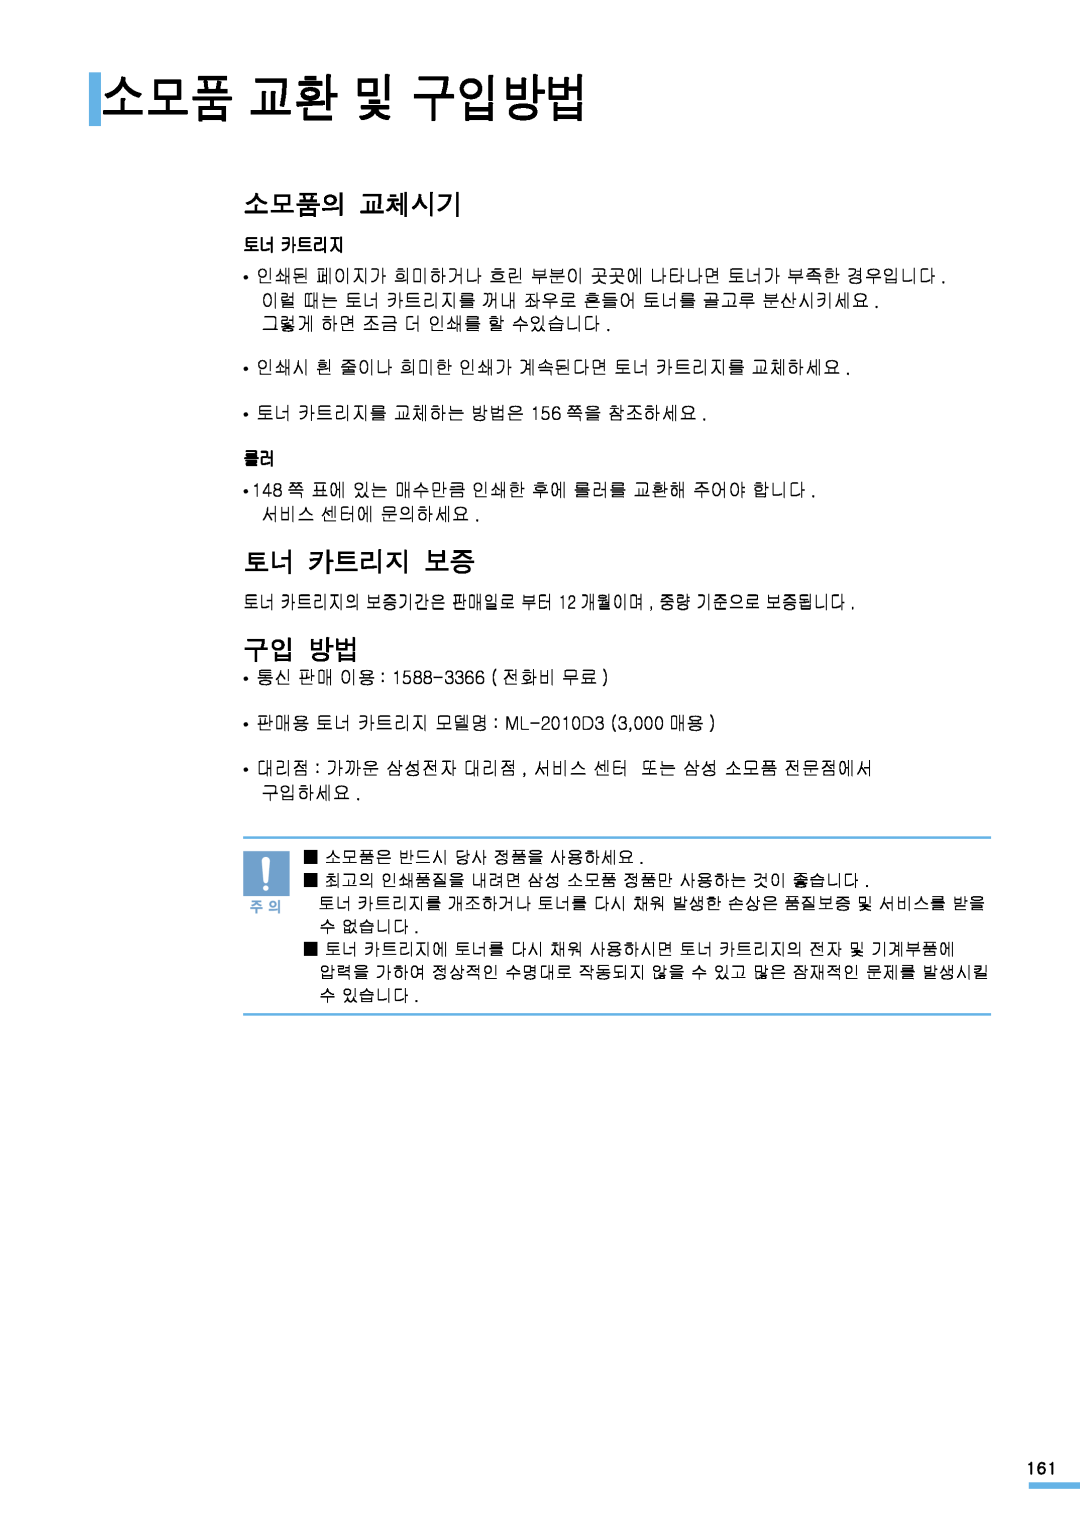 Samsung ML-2571N manual 소모품 교환 및 구입방법, 소모품의 교체시기, 토너 카트리지 보증, 구입 방법 